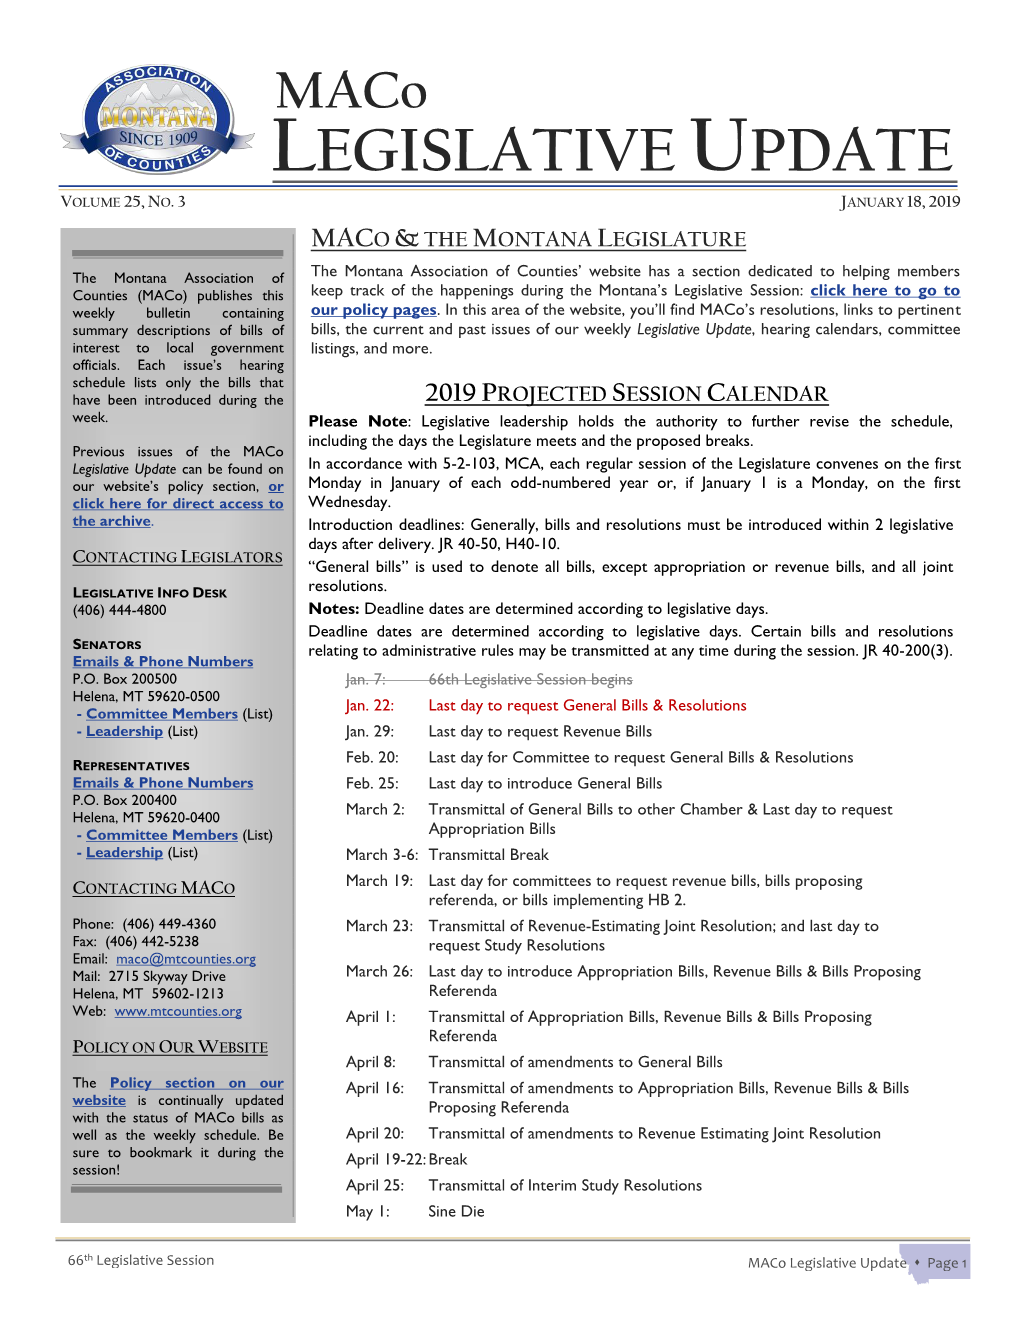 Legislative Update Volume 25, No